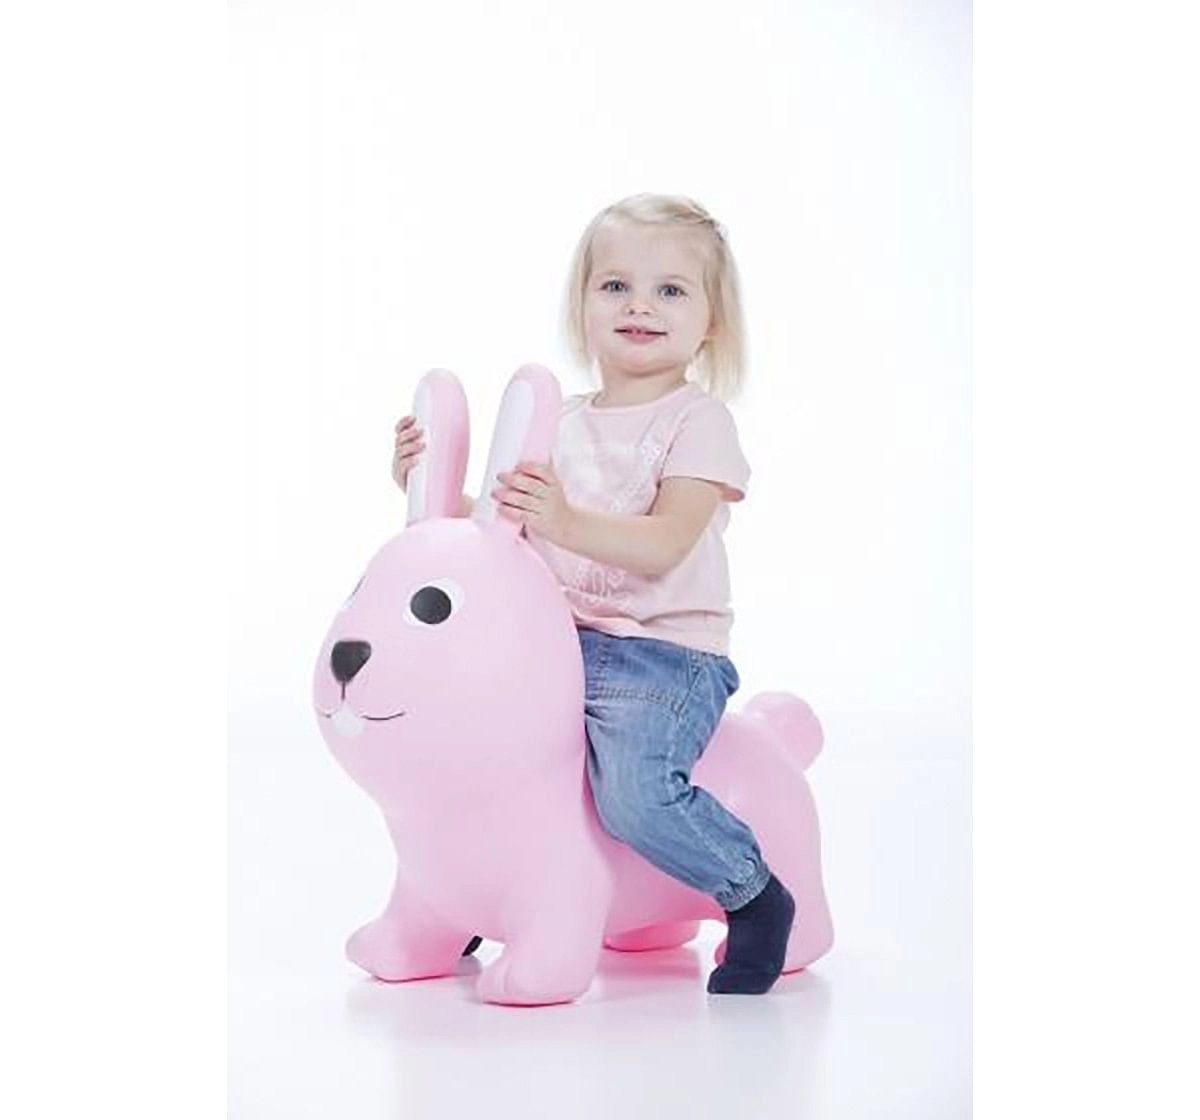 Gerado Jumpy Hopping Bunny for Kids age 1Y+ (Pink)